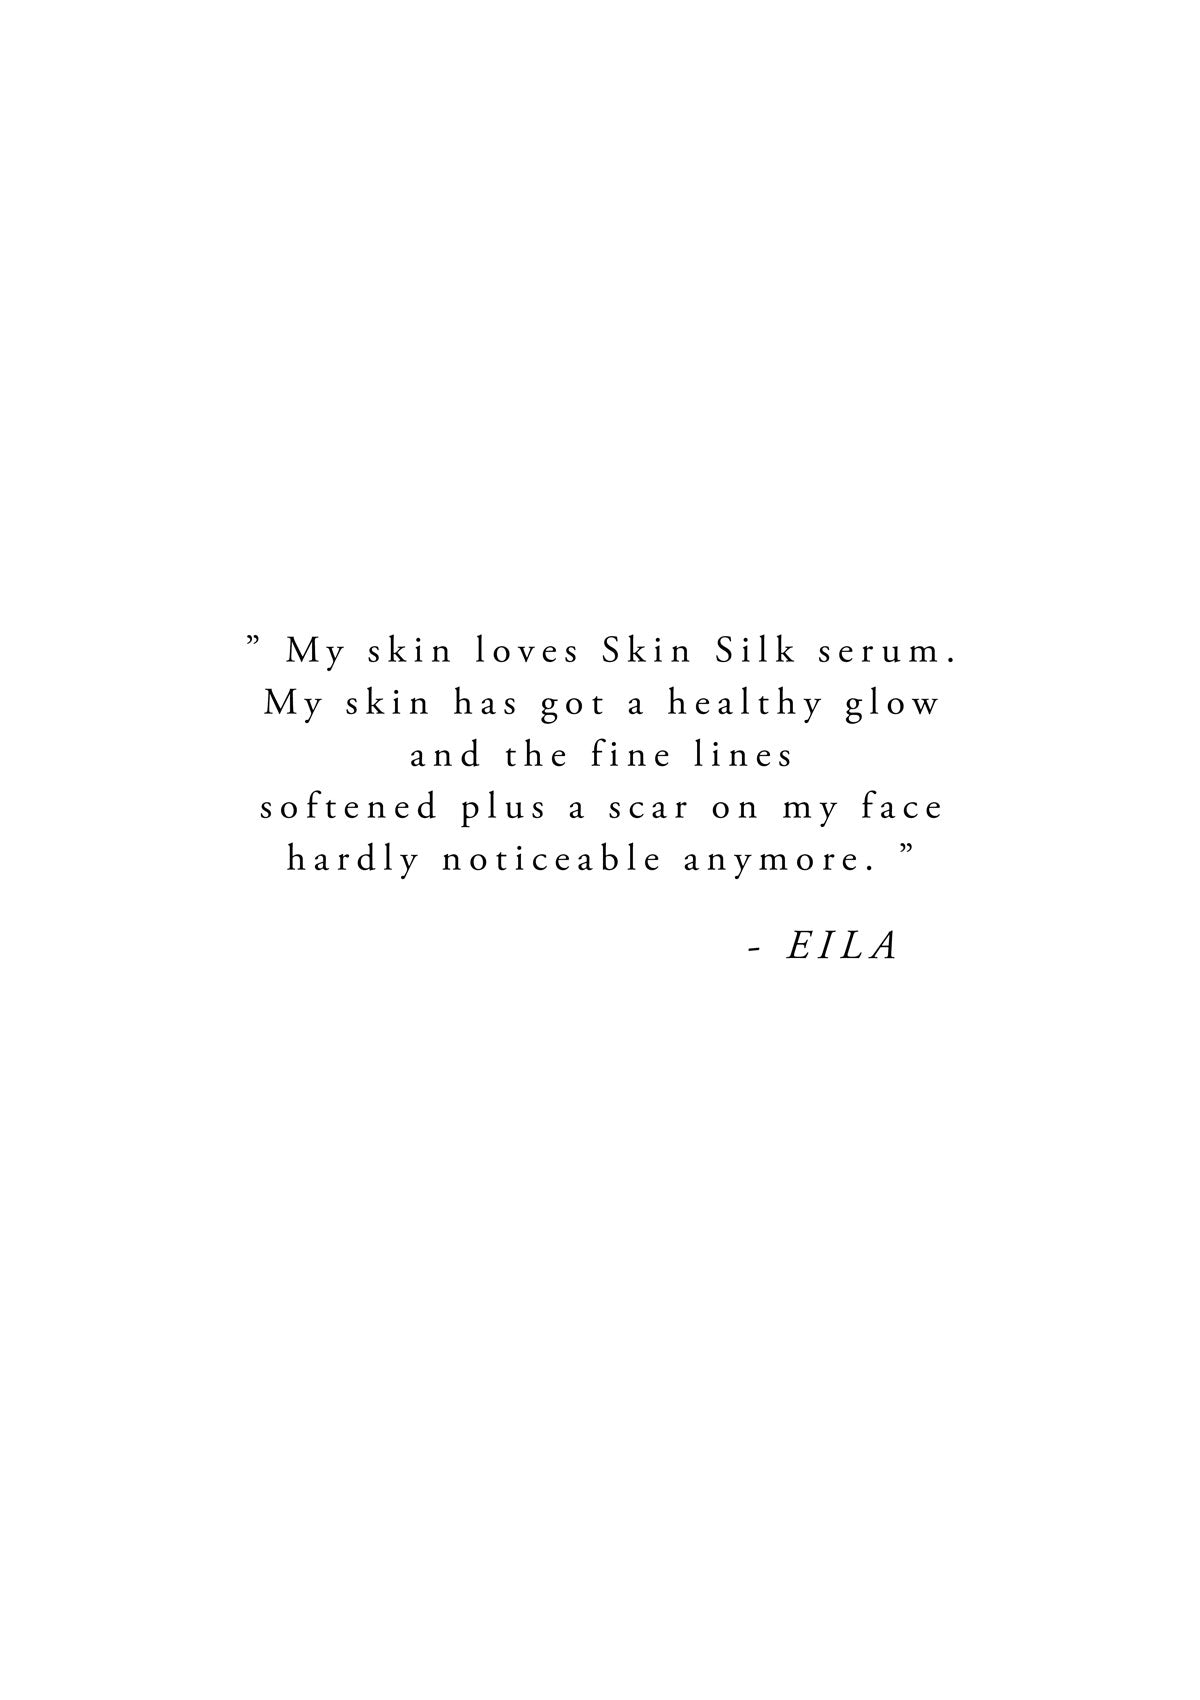 Silky Serum │ Skin Silk │ Niki Newd® Testimonial